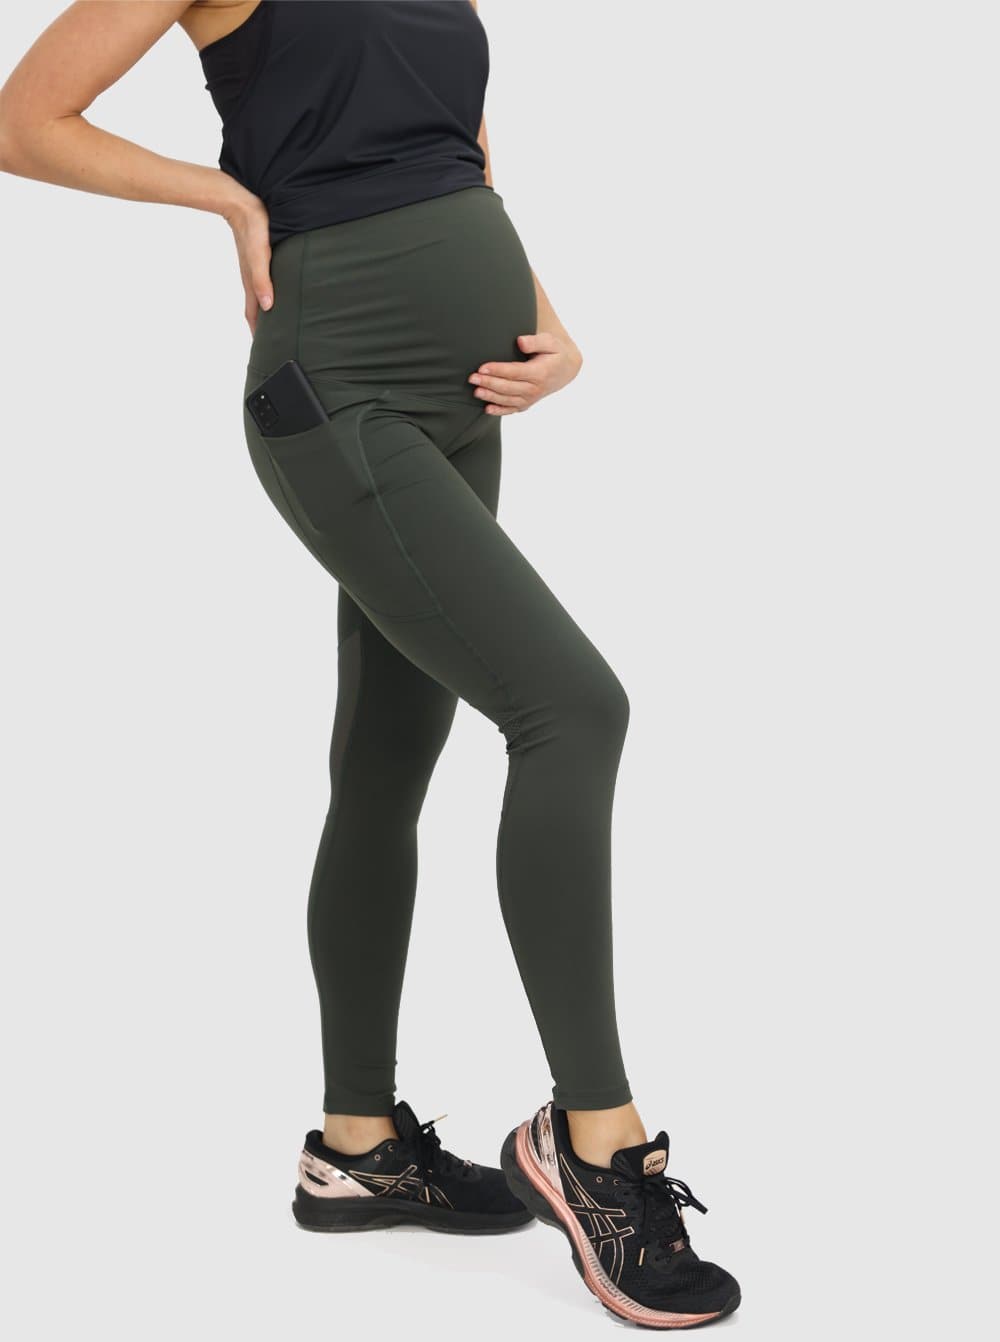 Maternity Sports Legging - Khaki Green